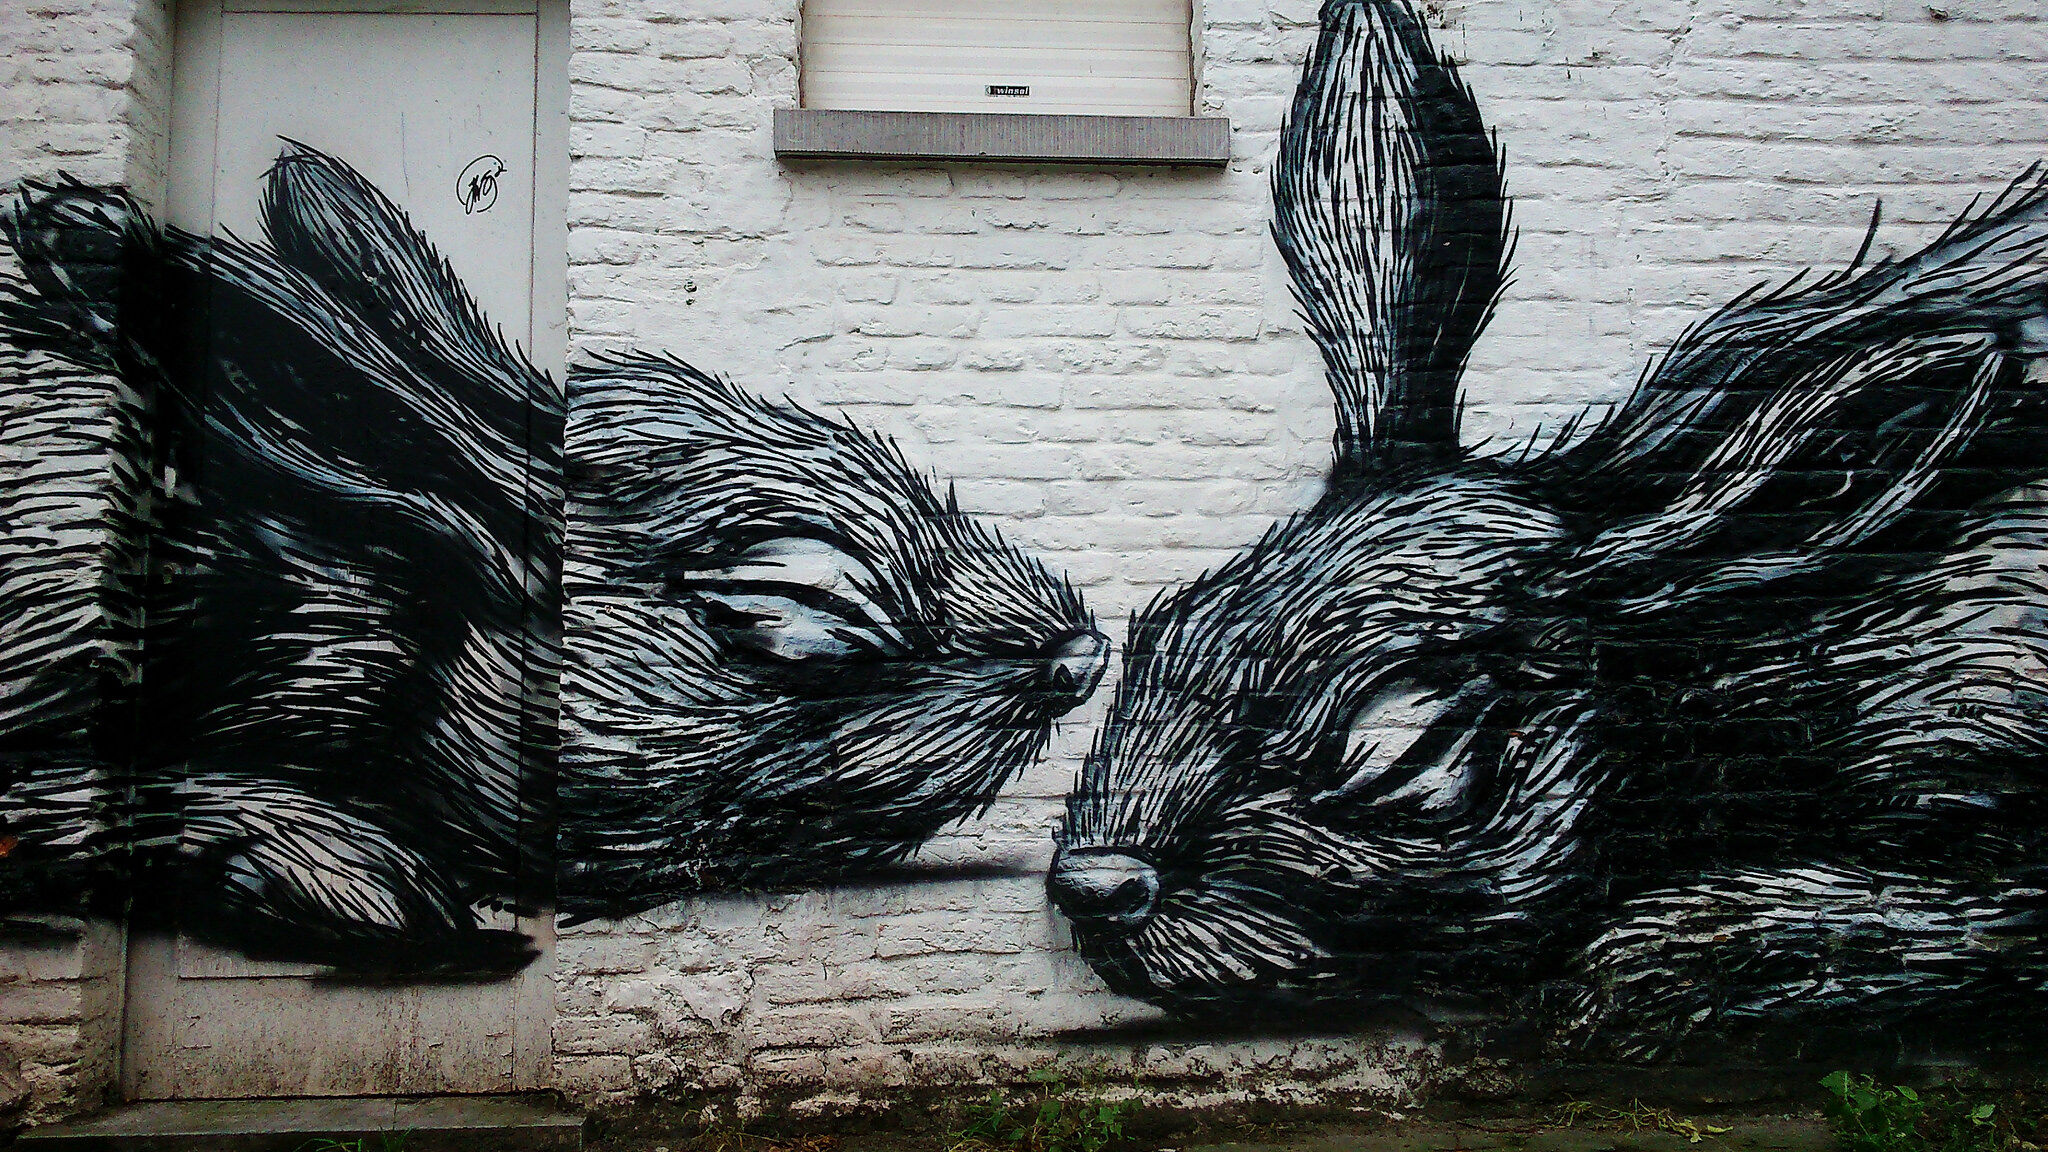 Roa&mdash;The Rabbits